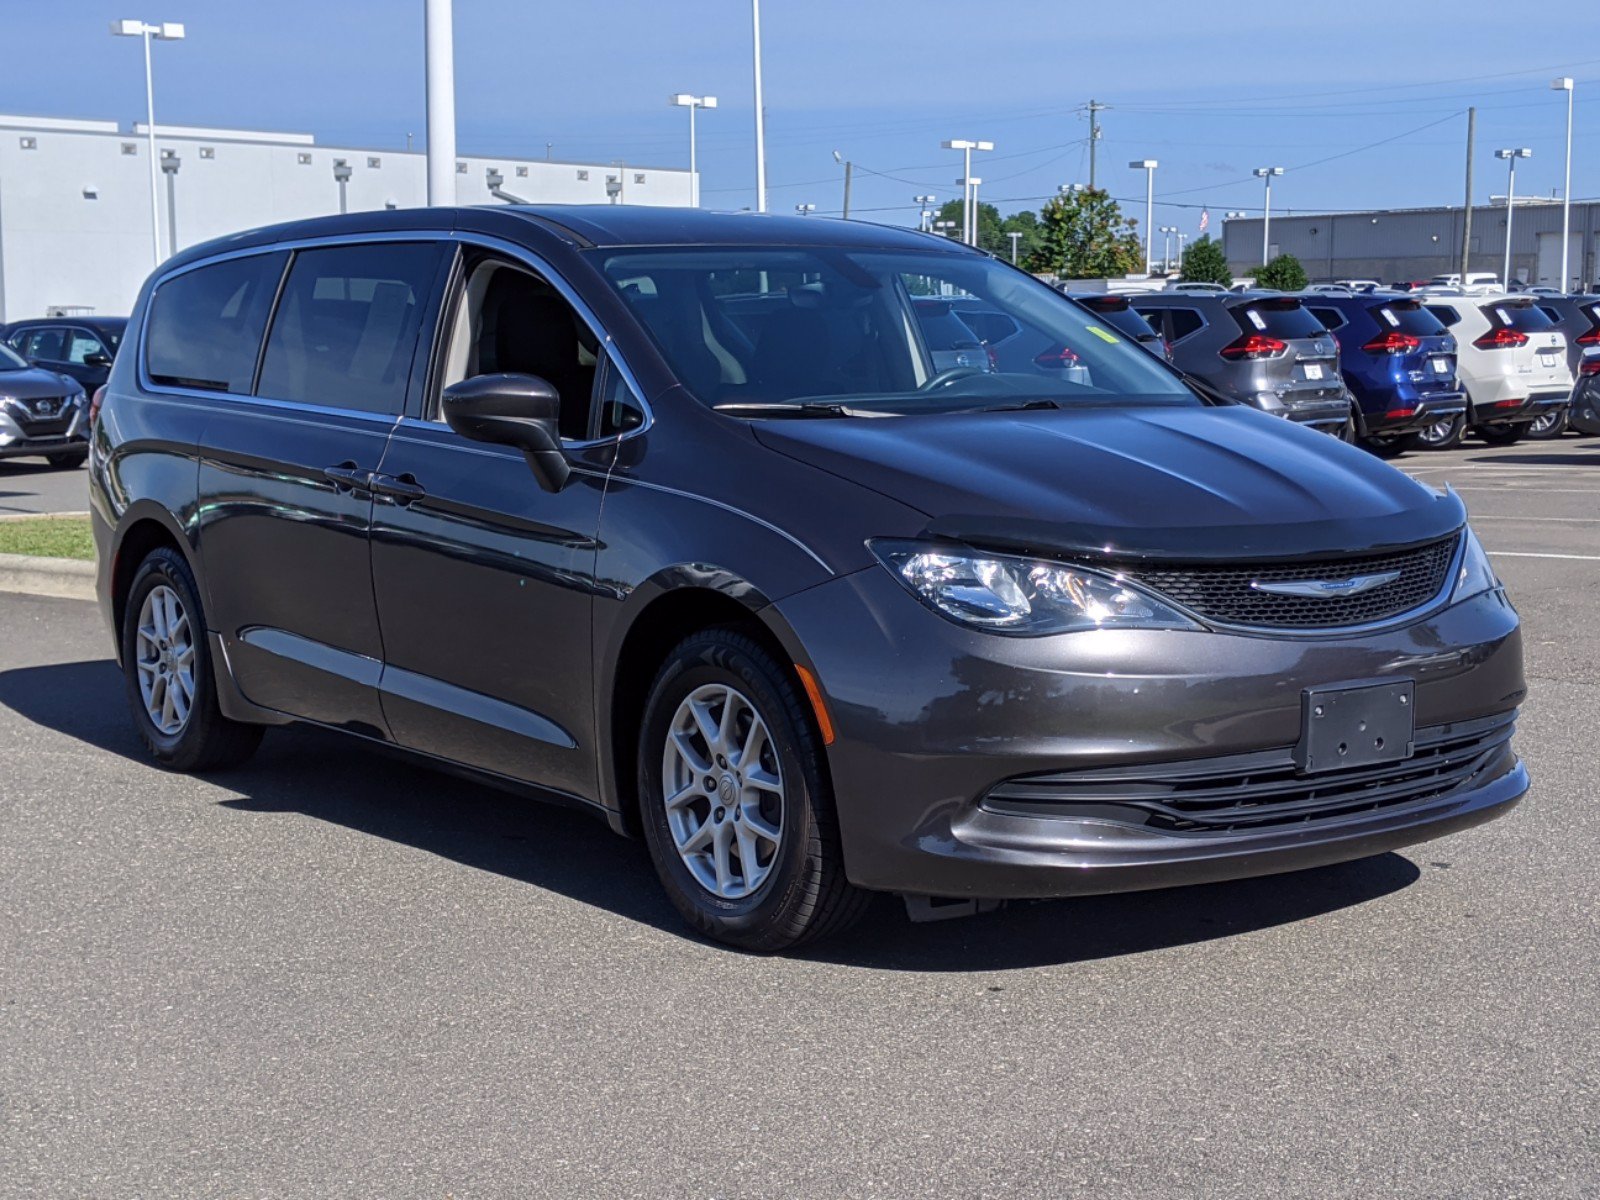 PreOwned 2017 Chrysler Pacifica LX FWD Minivan, Passenger